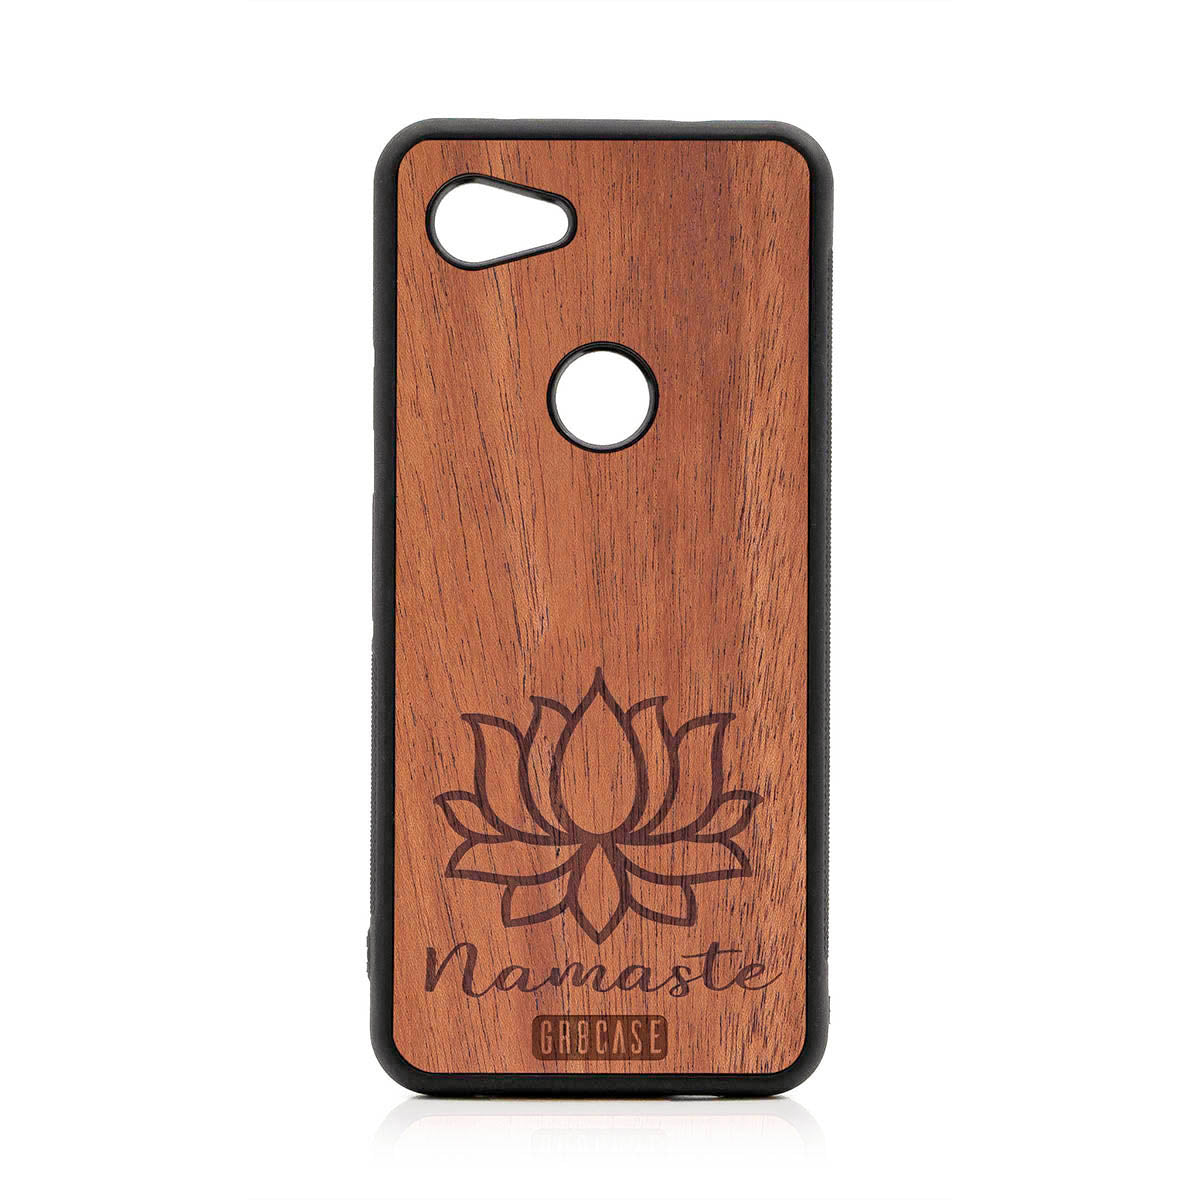 Namaste (Lotus Flower) Design Wood Case For Google Pixel 3A XL